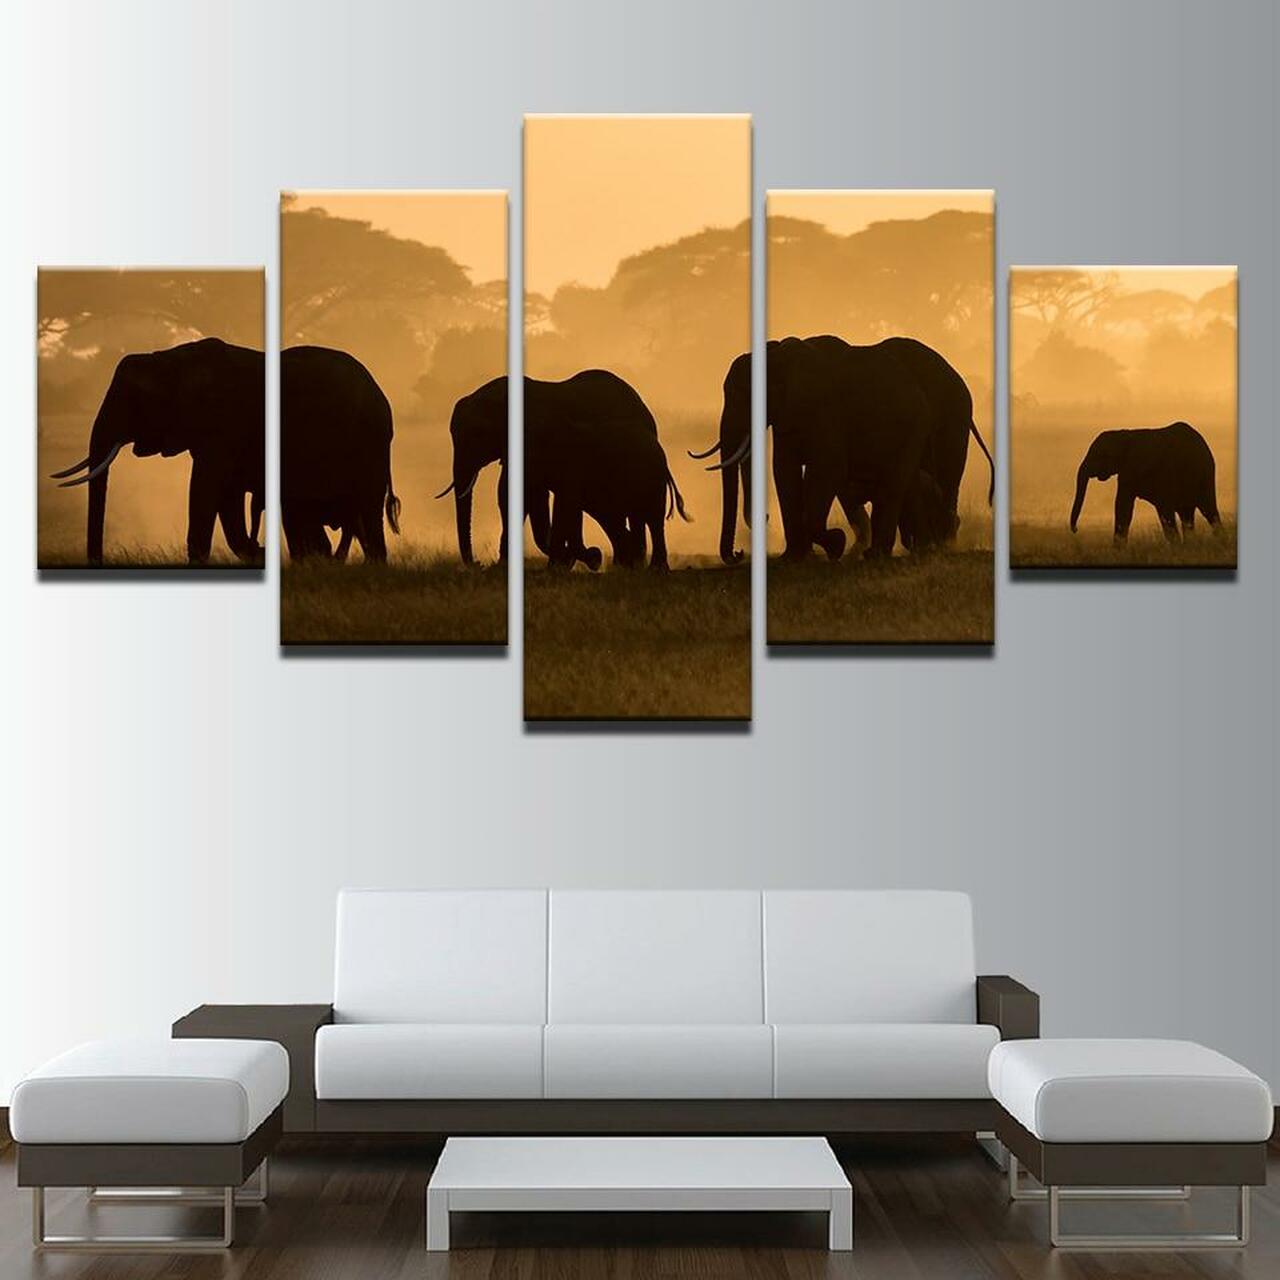 Jungle Elephants 5 Piece Canvas Art Wall Decor